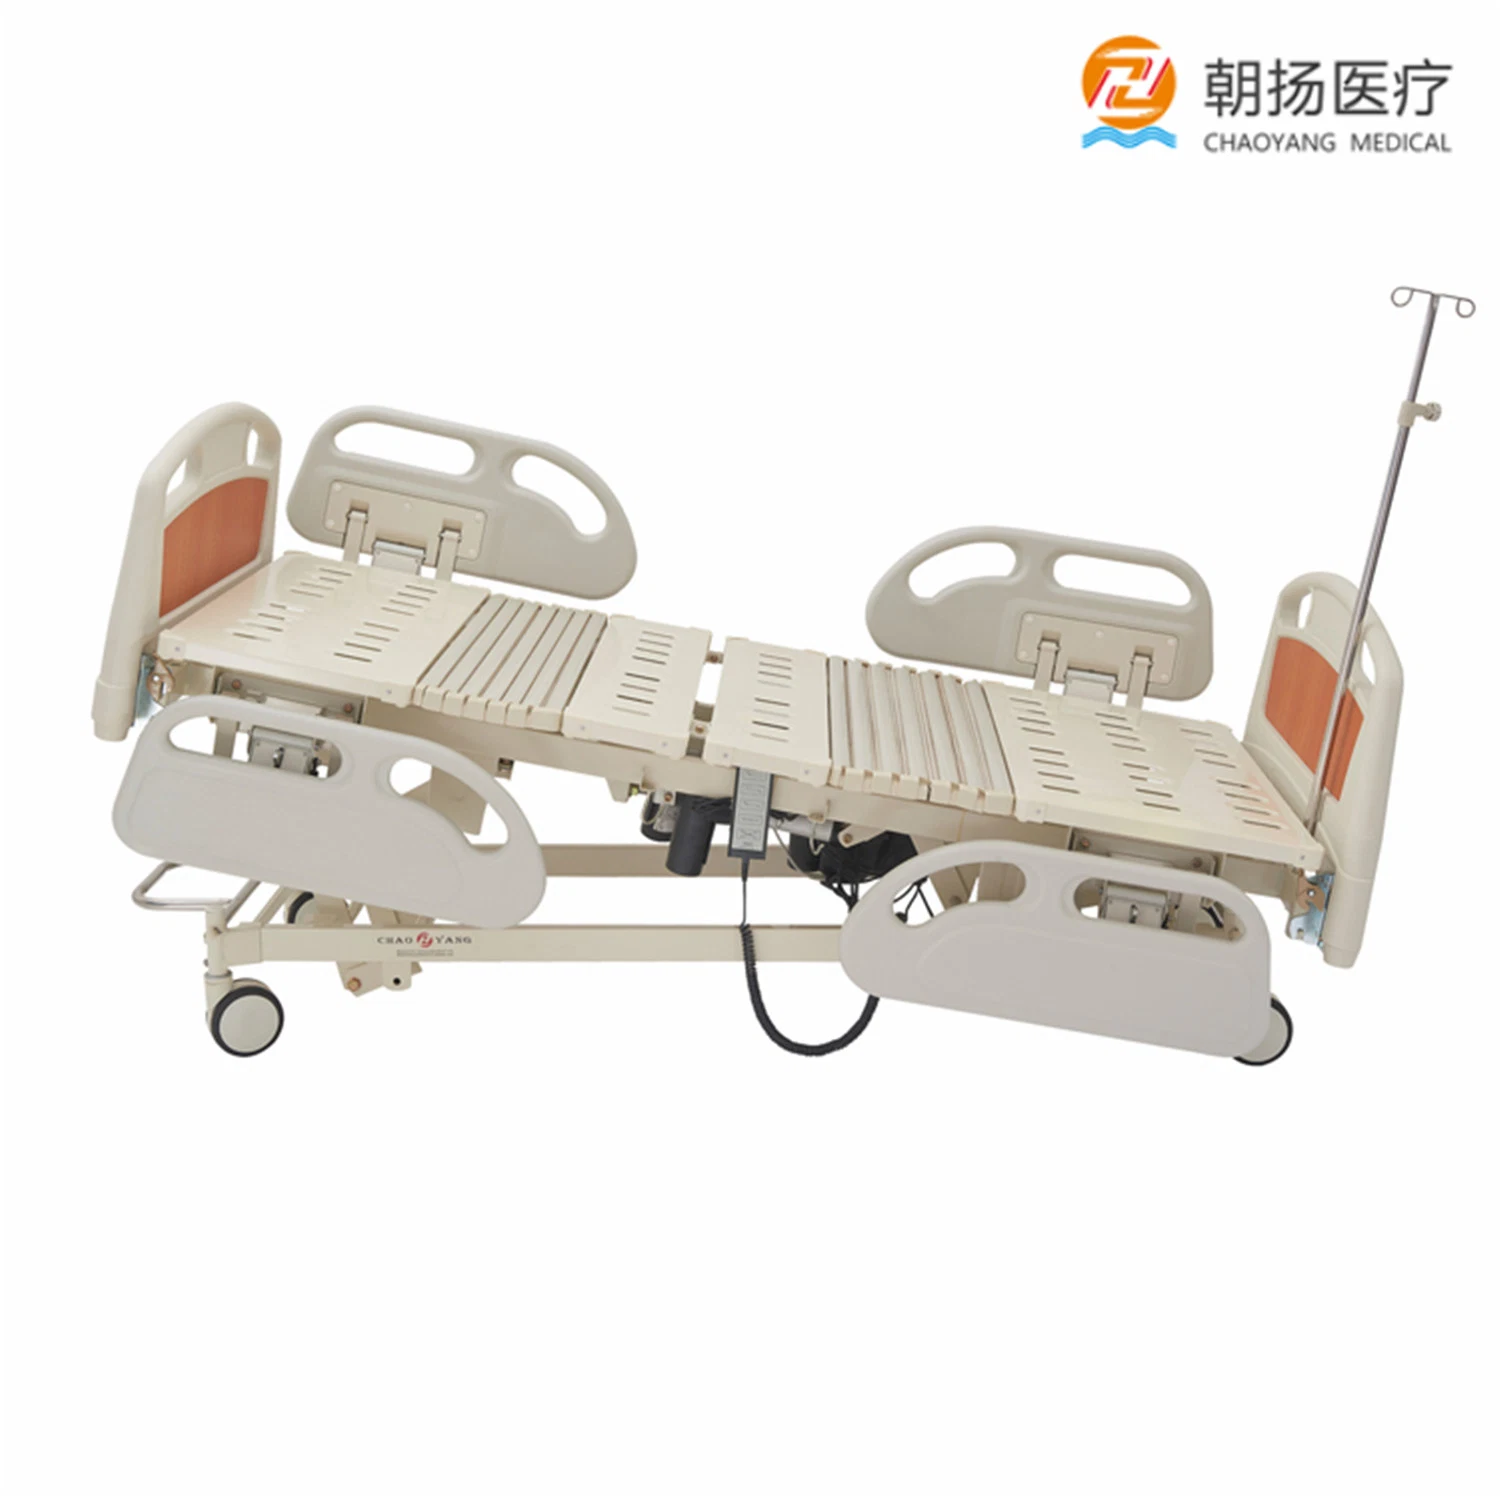 Hospital Furniture Five Function Electric Medical Bed Hospital Bed